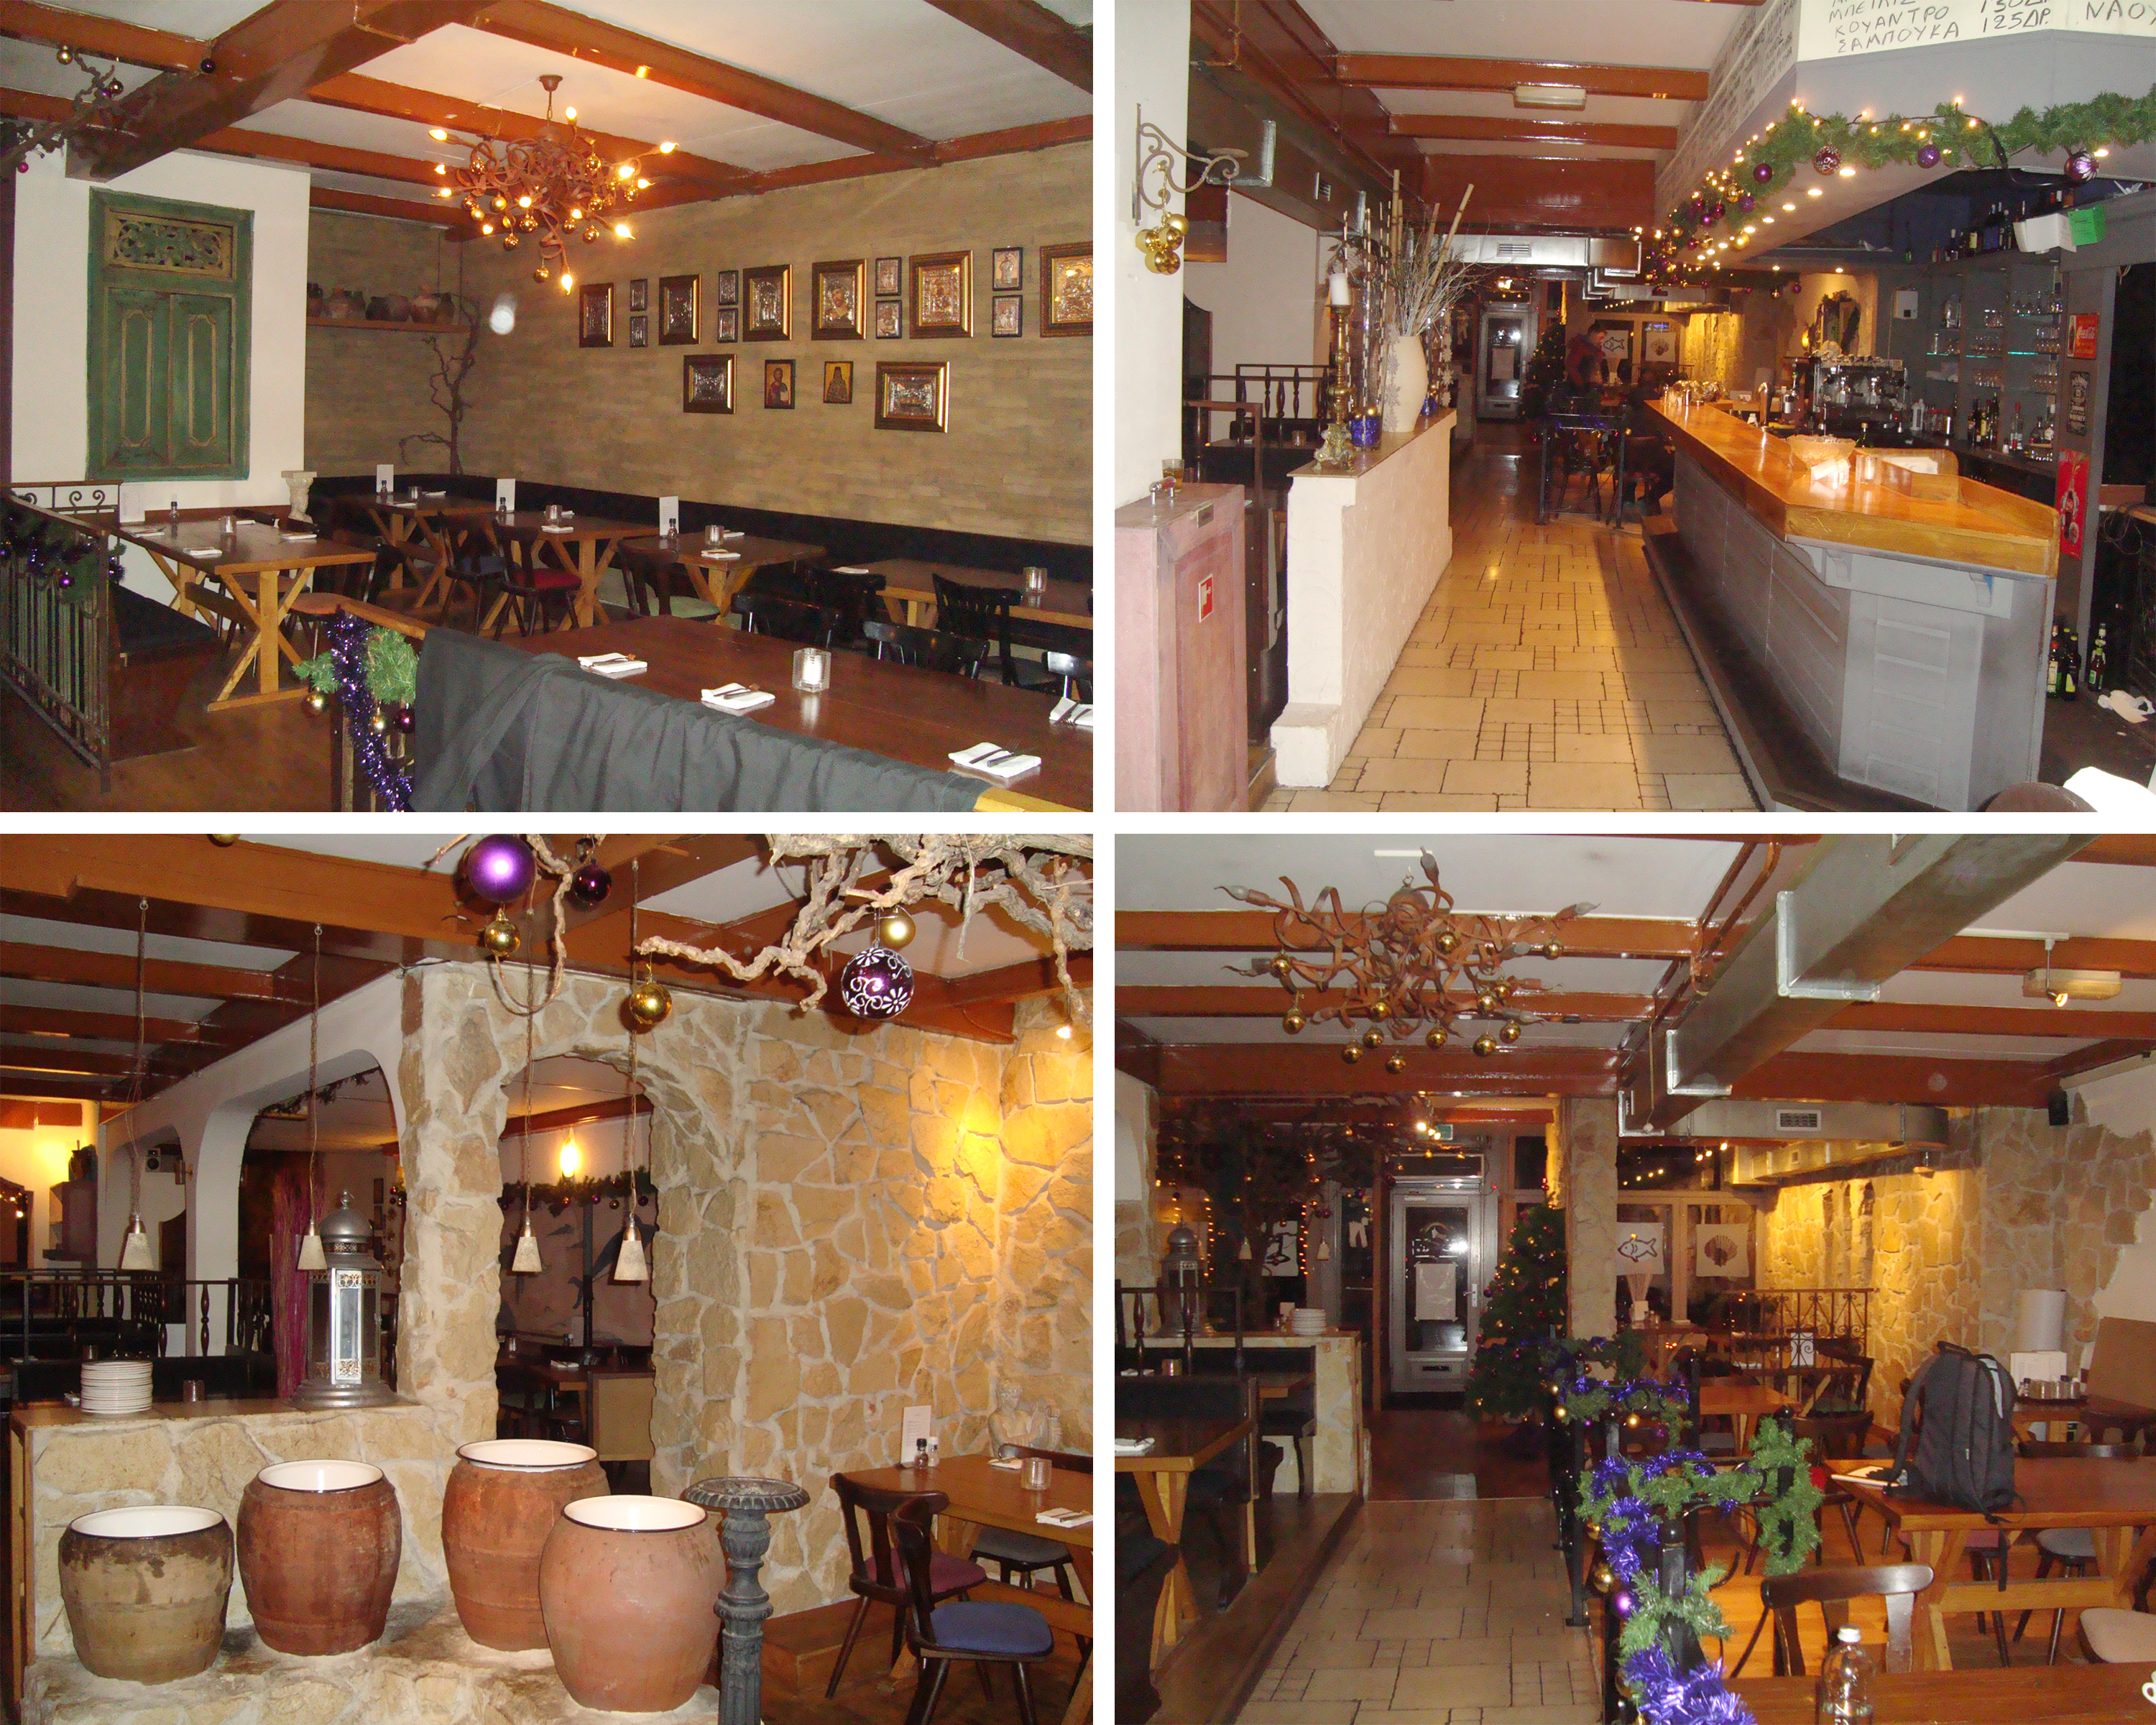 The old restaurant "Delphi"